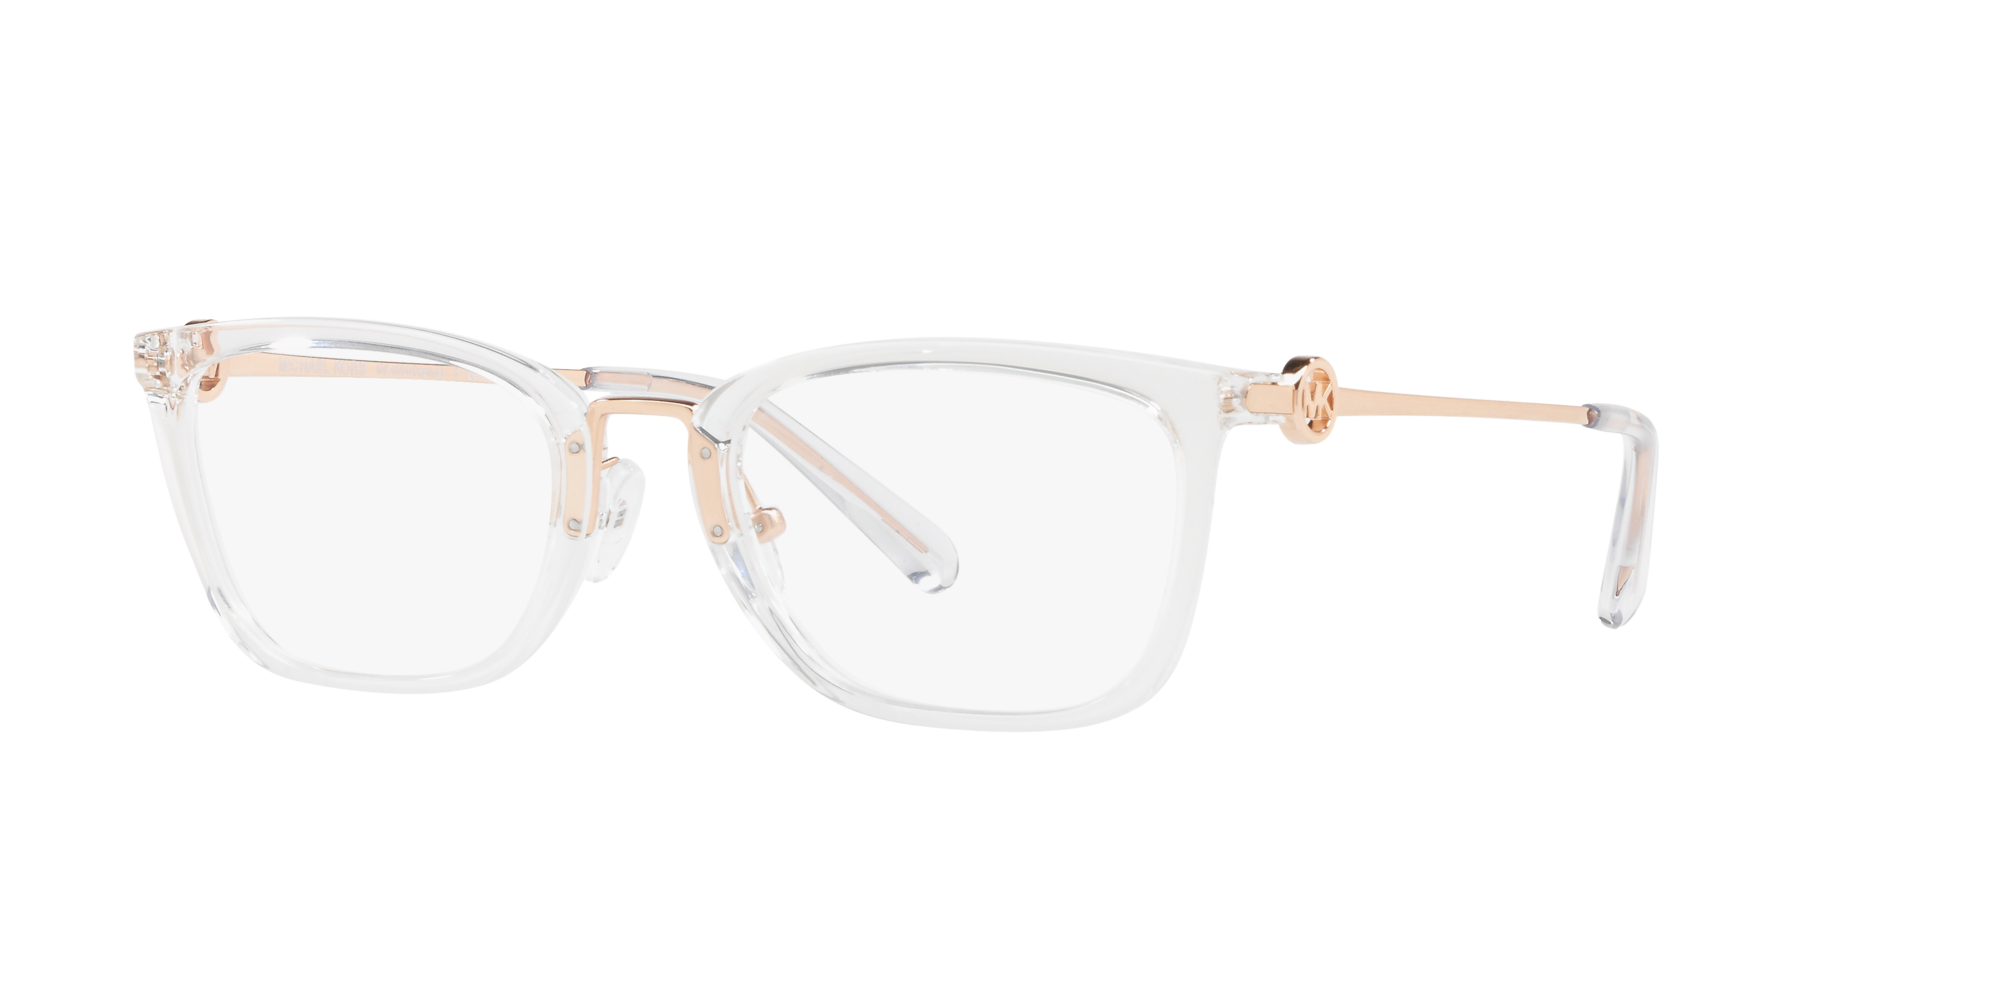 michael kors clear frame sunglasses